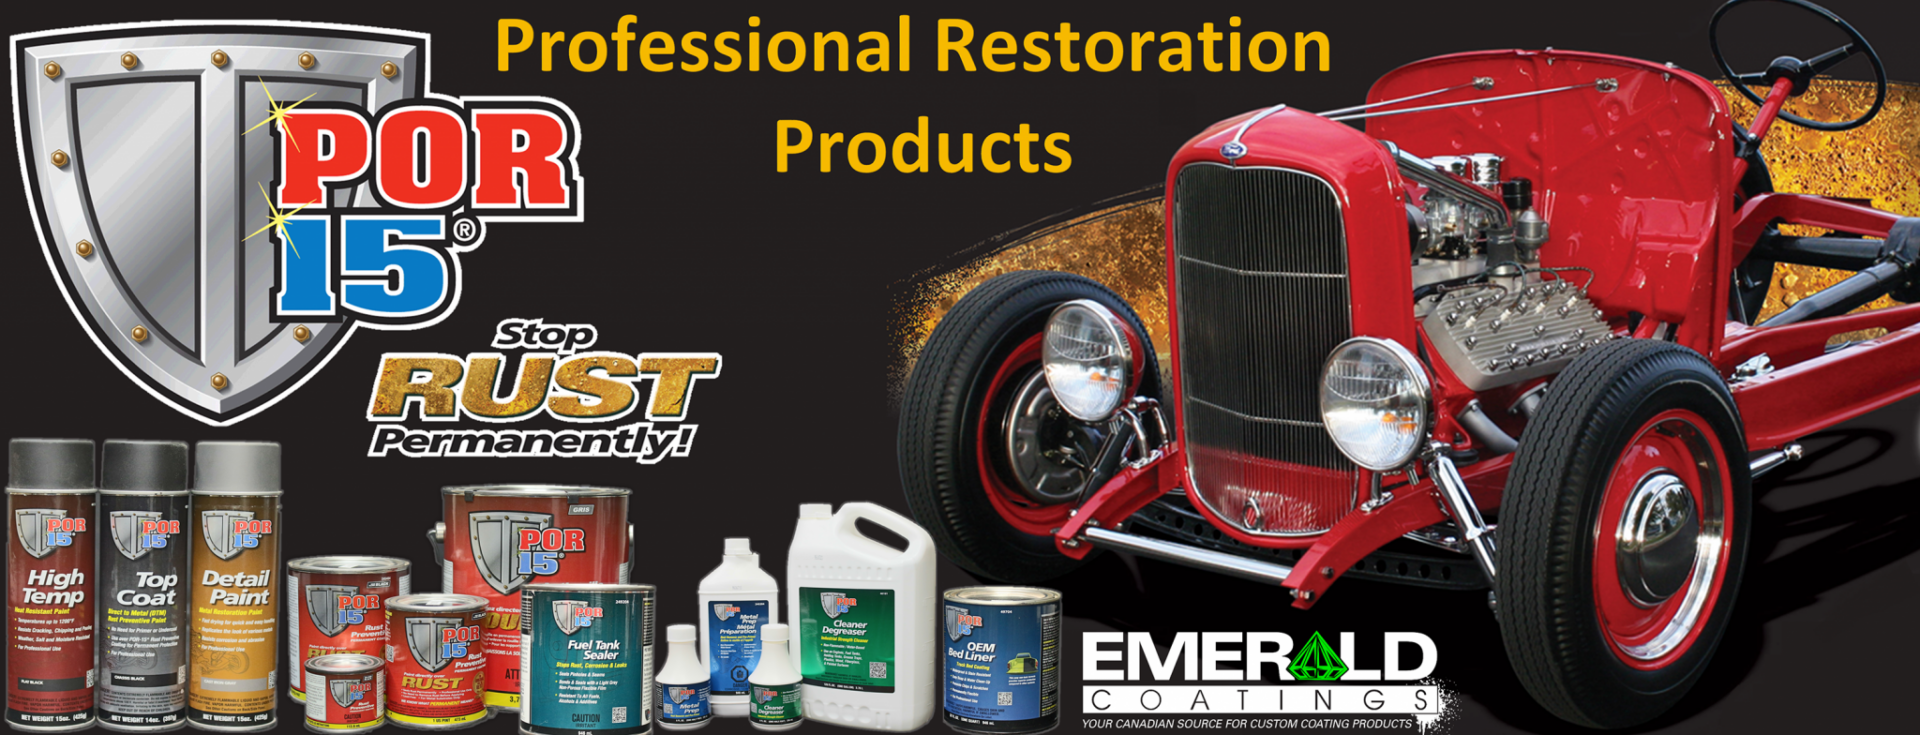 POR-15 Rust Preventative in Automotive Specialty Paints 